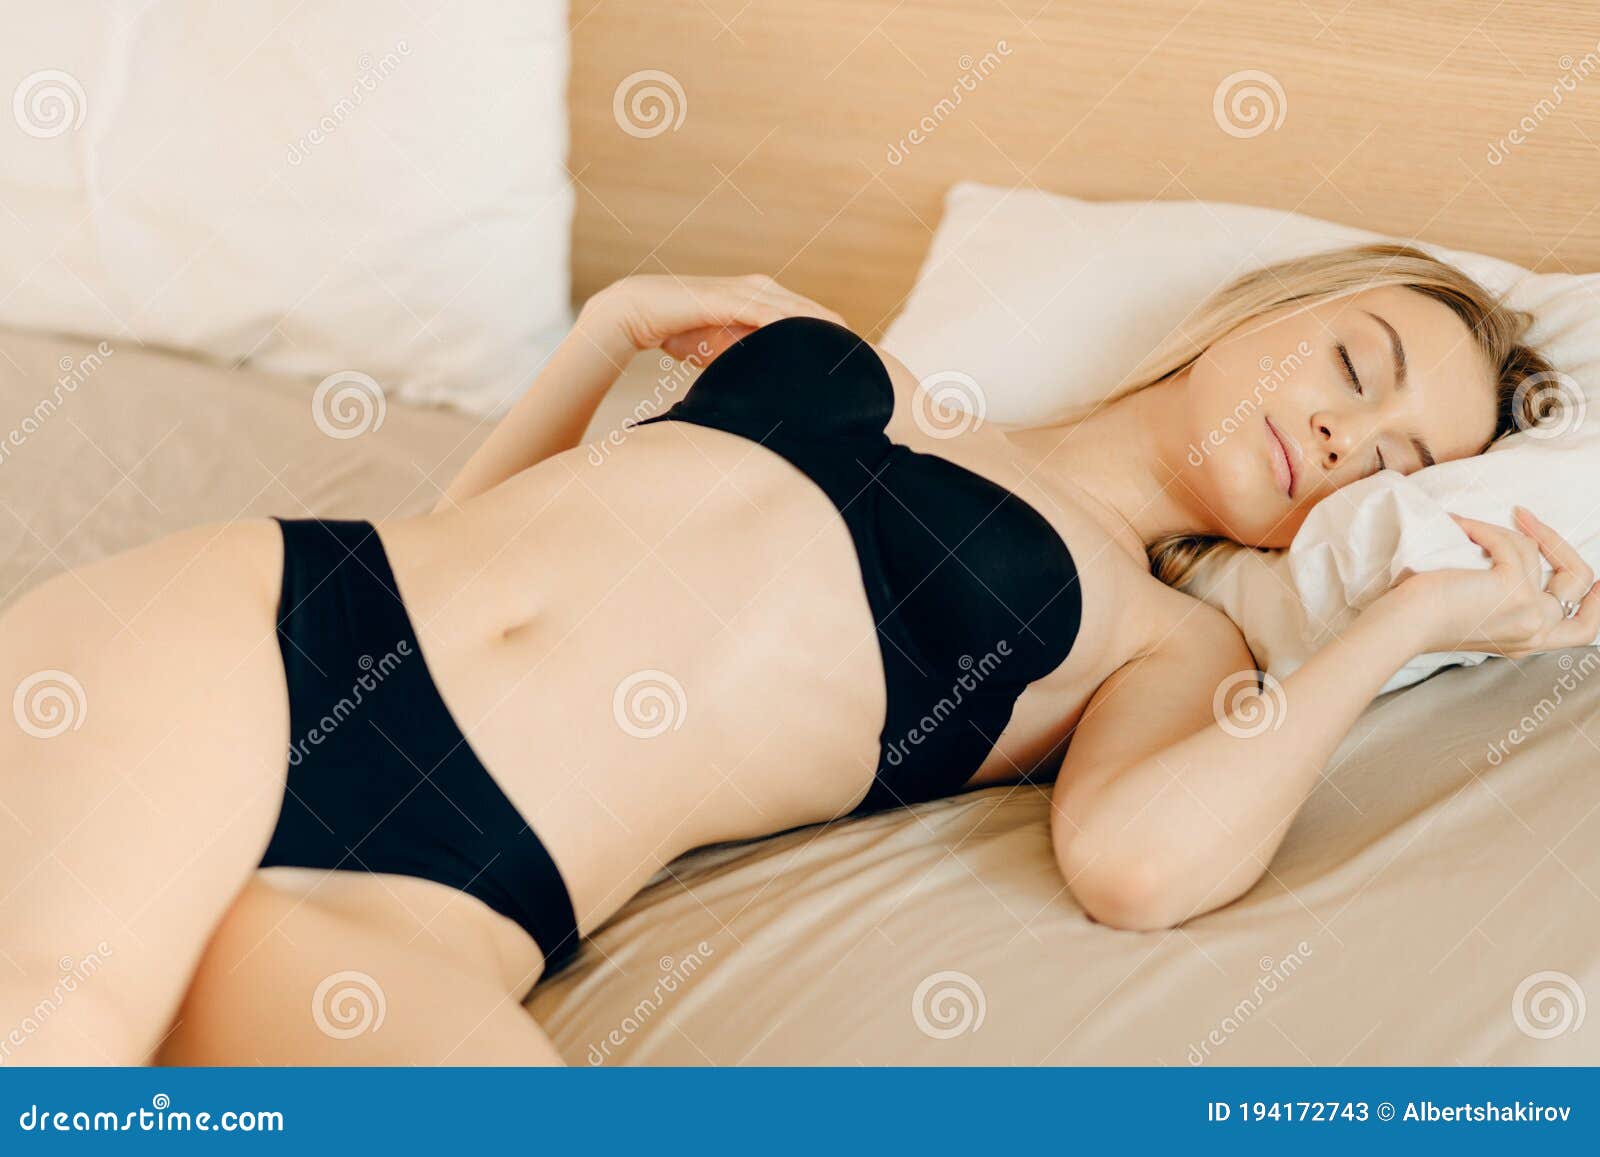 black teen sleeping naked